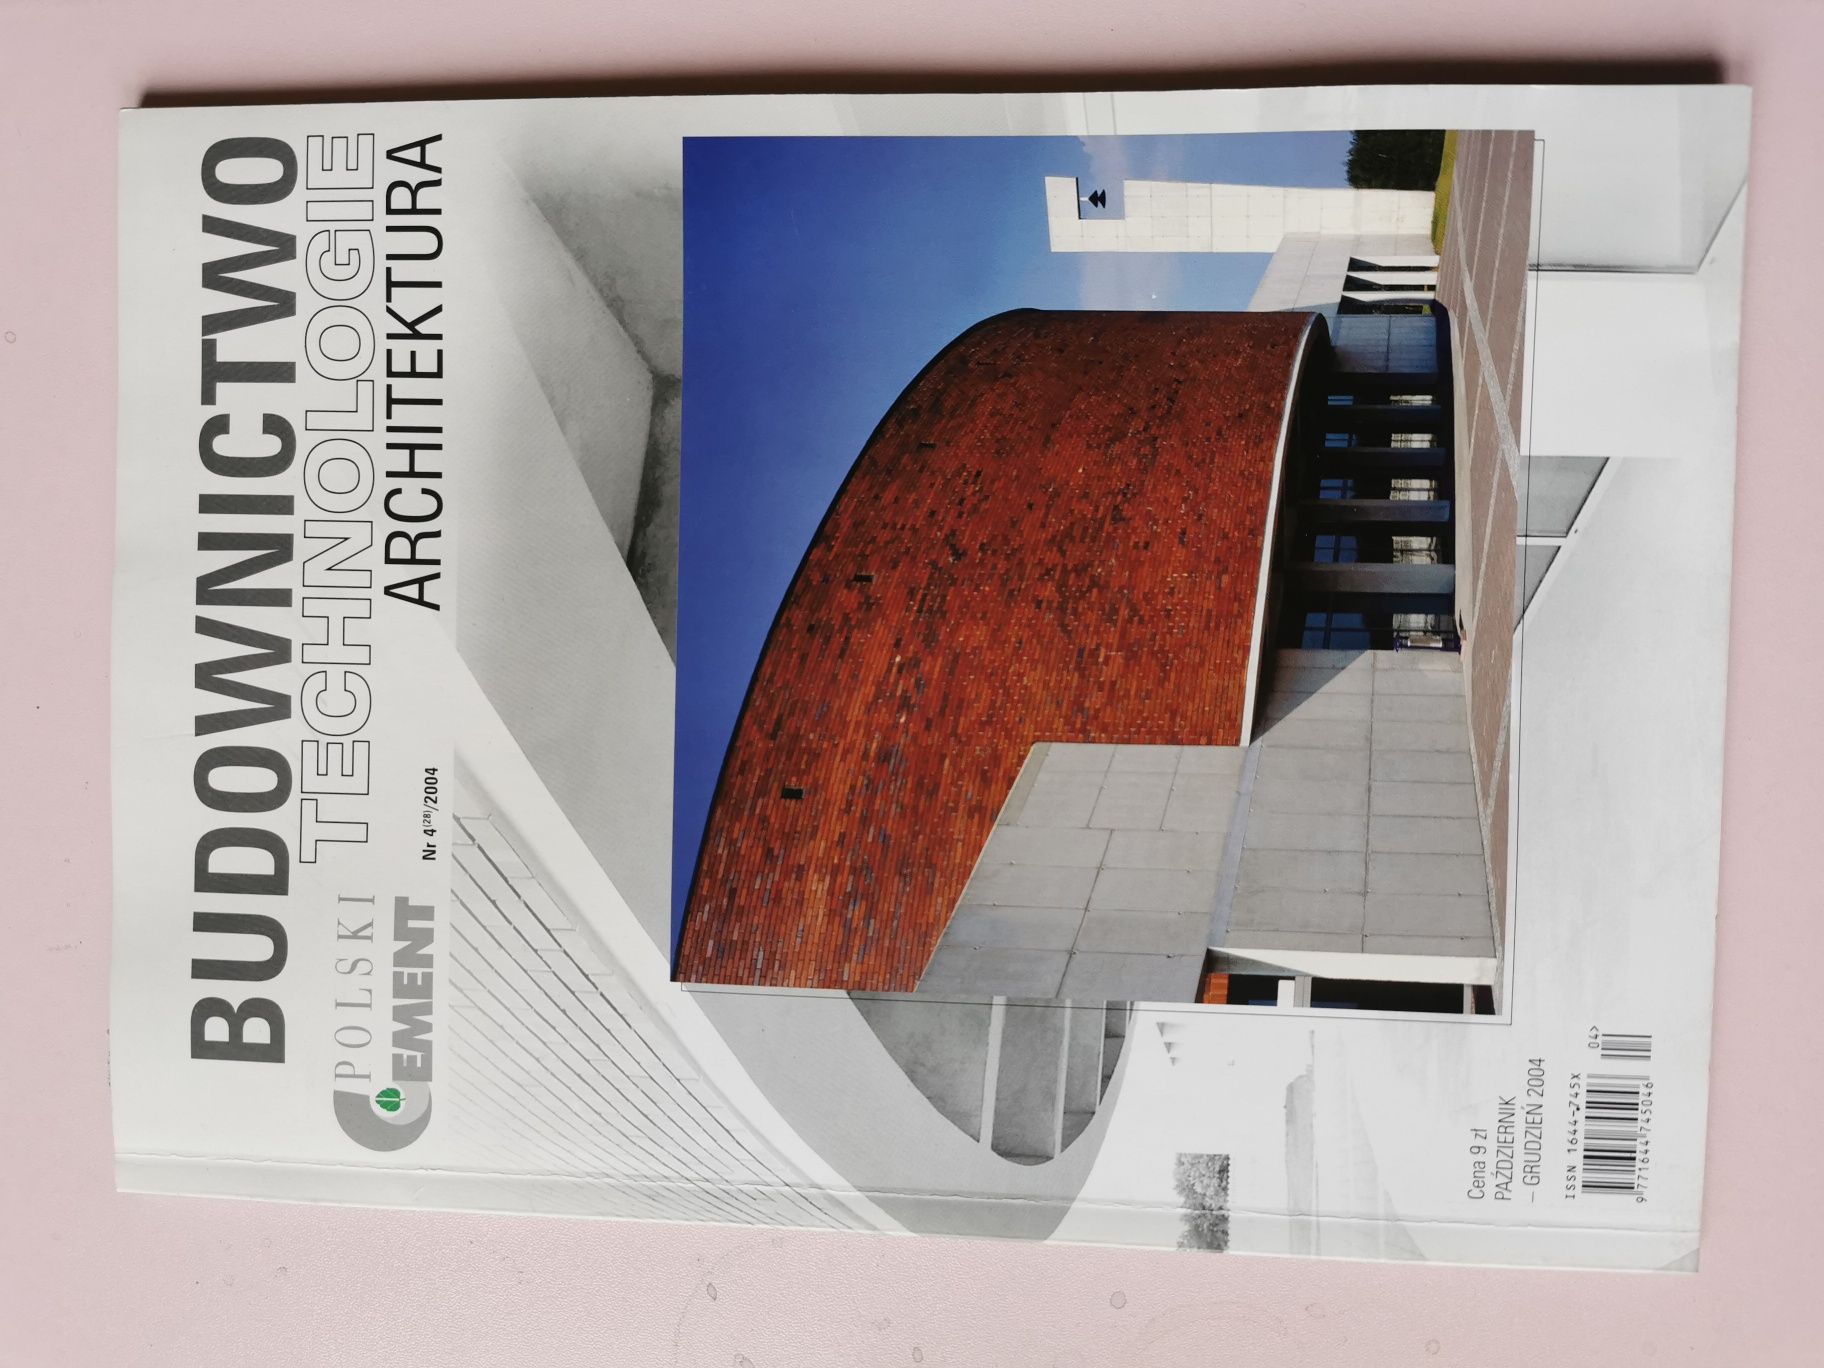 Budownictwo, technologie, architektura, 4/2004 gazeta kwartalnik